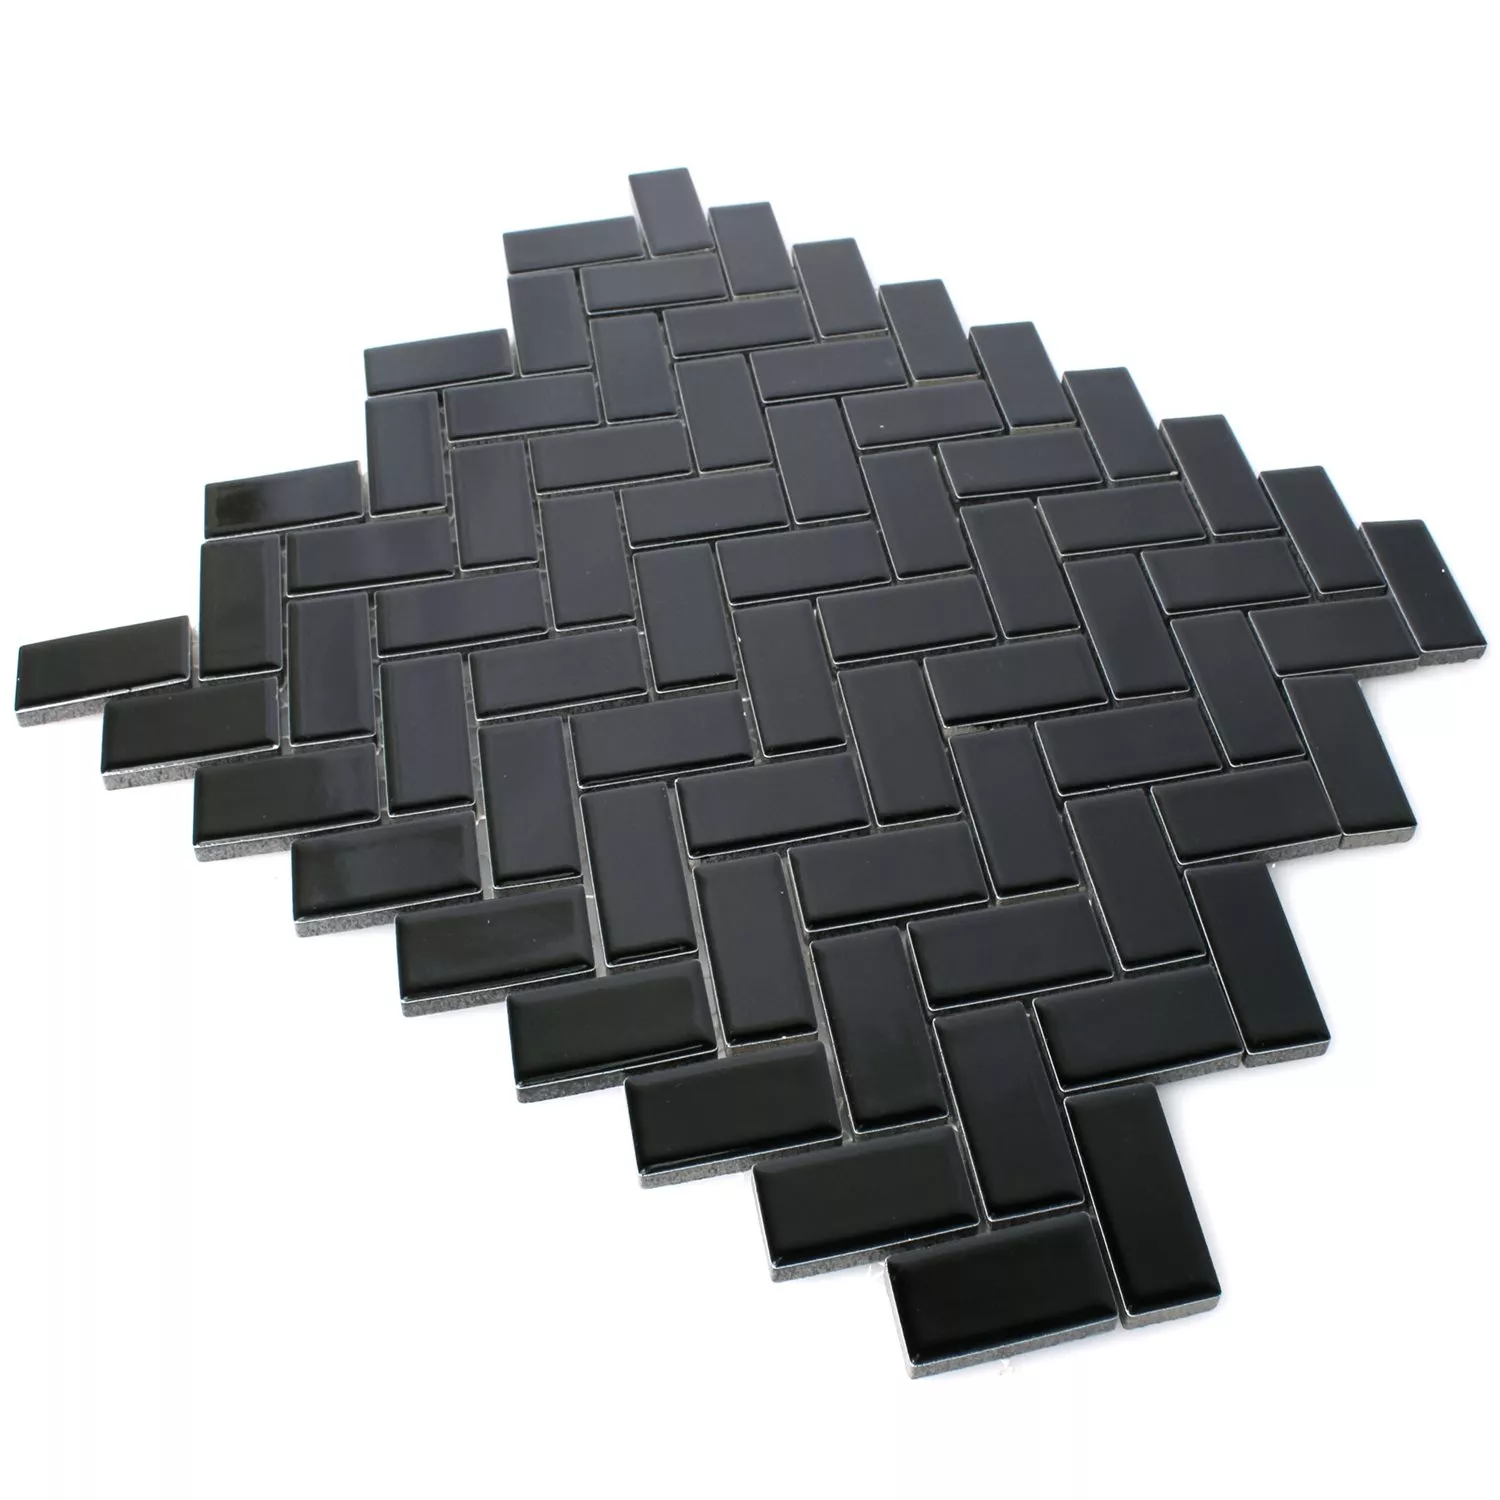 Sample Mosaic Tiles Ceramic Casillas Black Mat